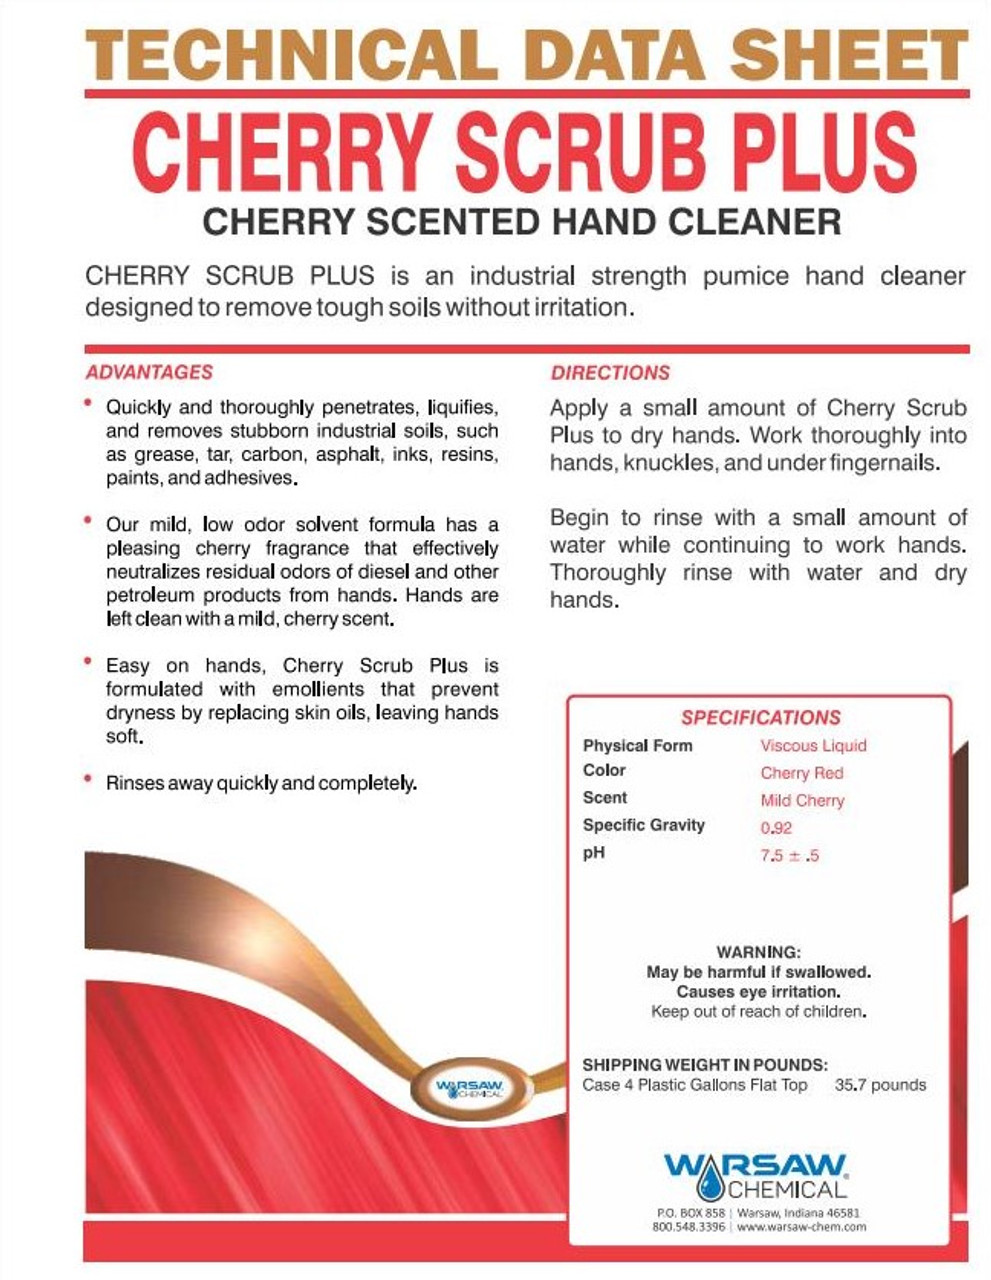 Cherry Scrub Hand Cleaner with Micro-Scrubs 4-gallon Case